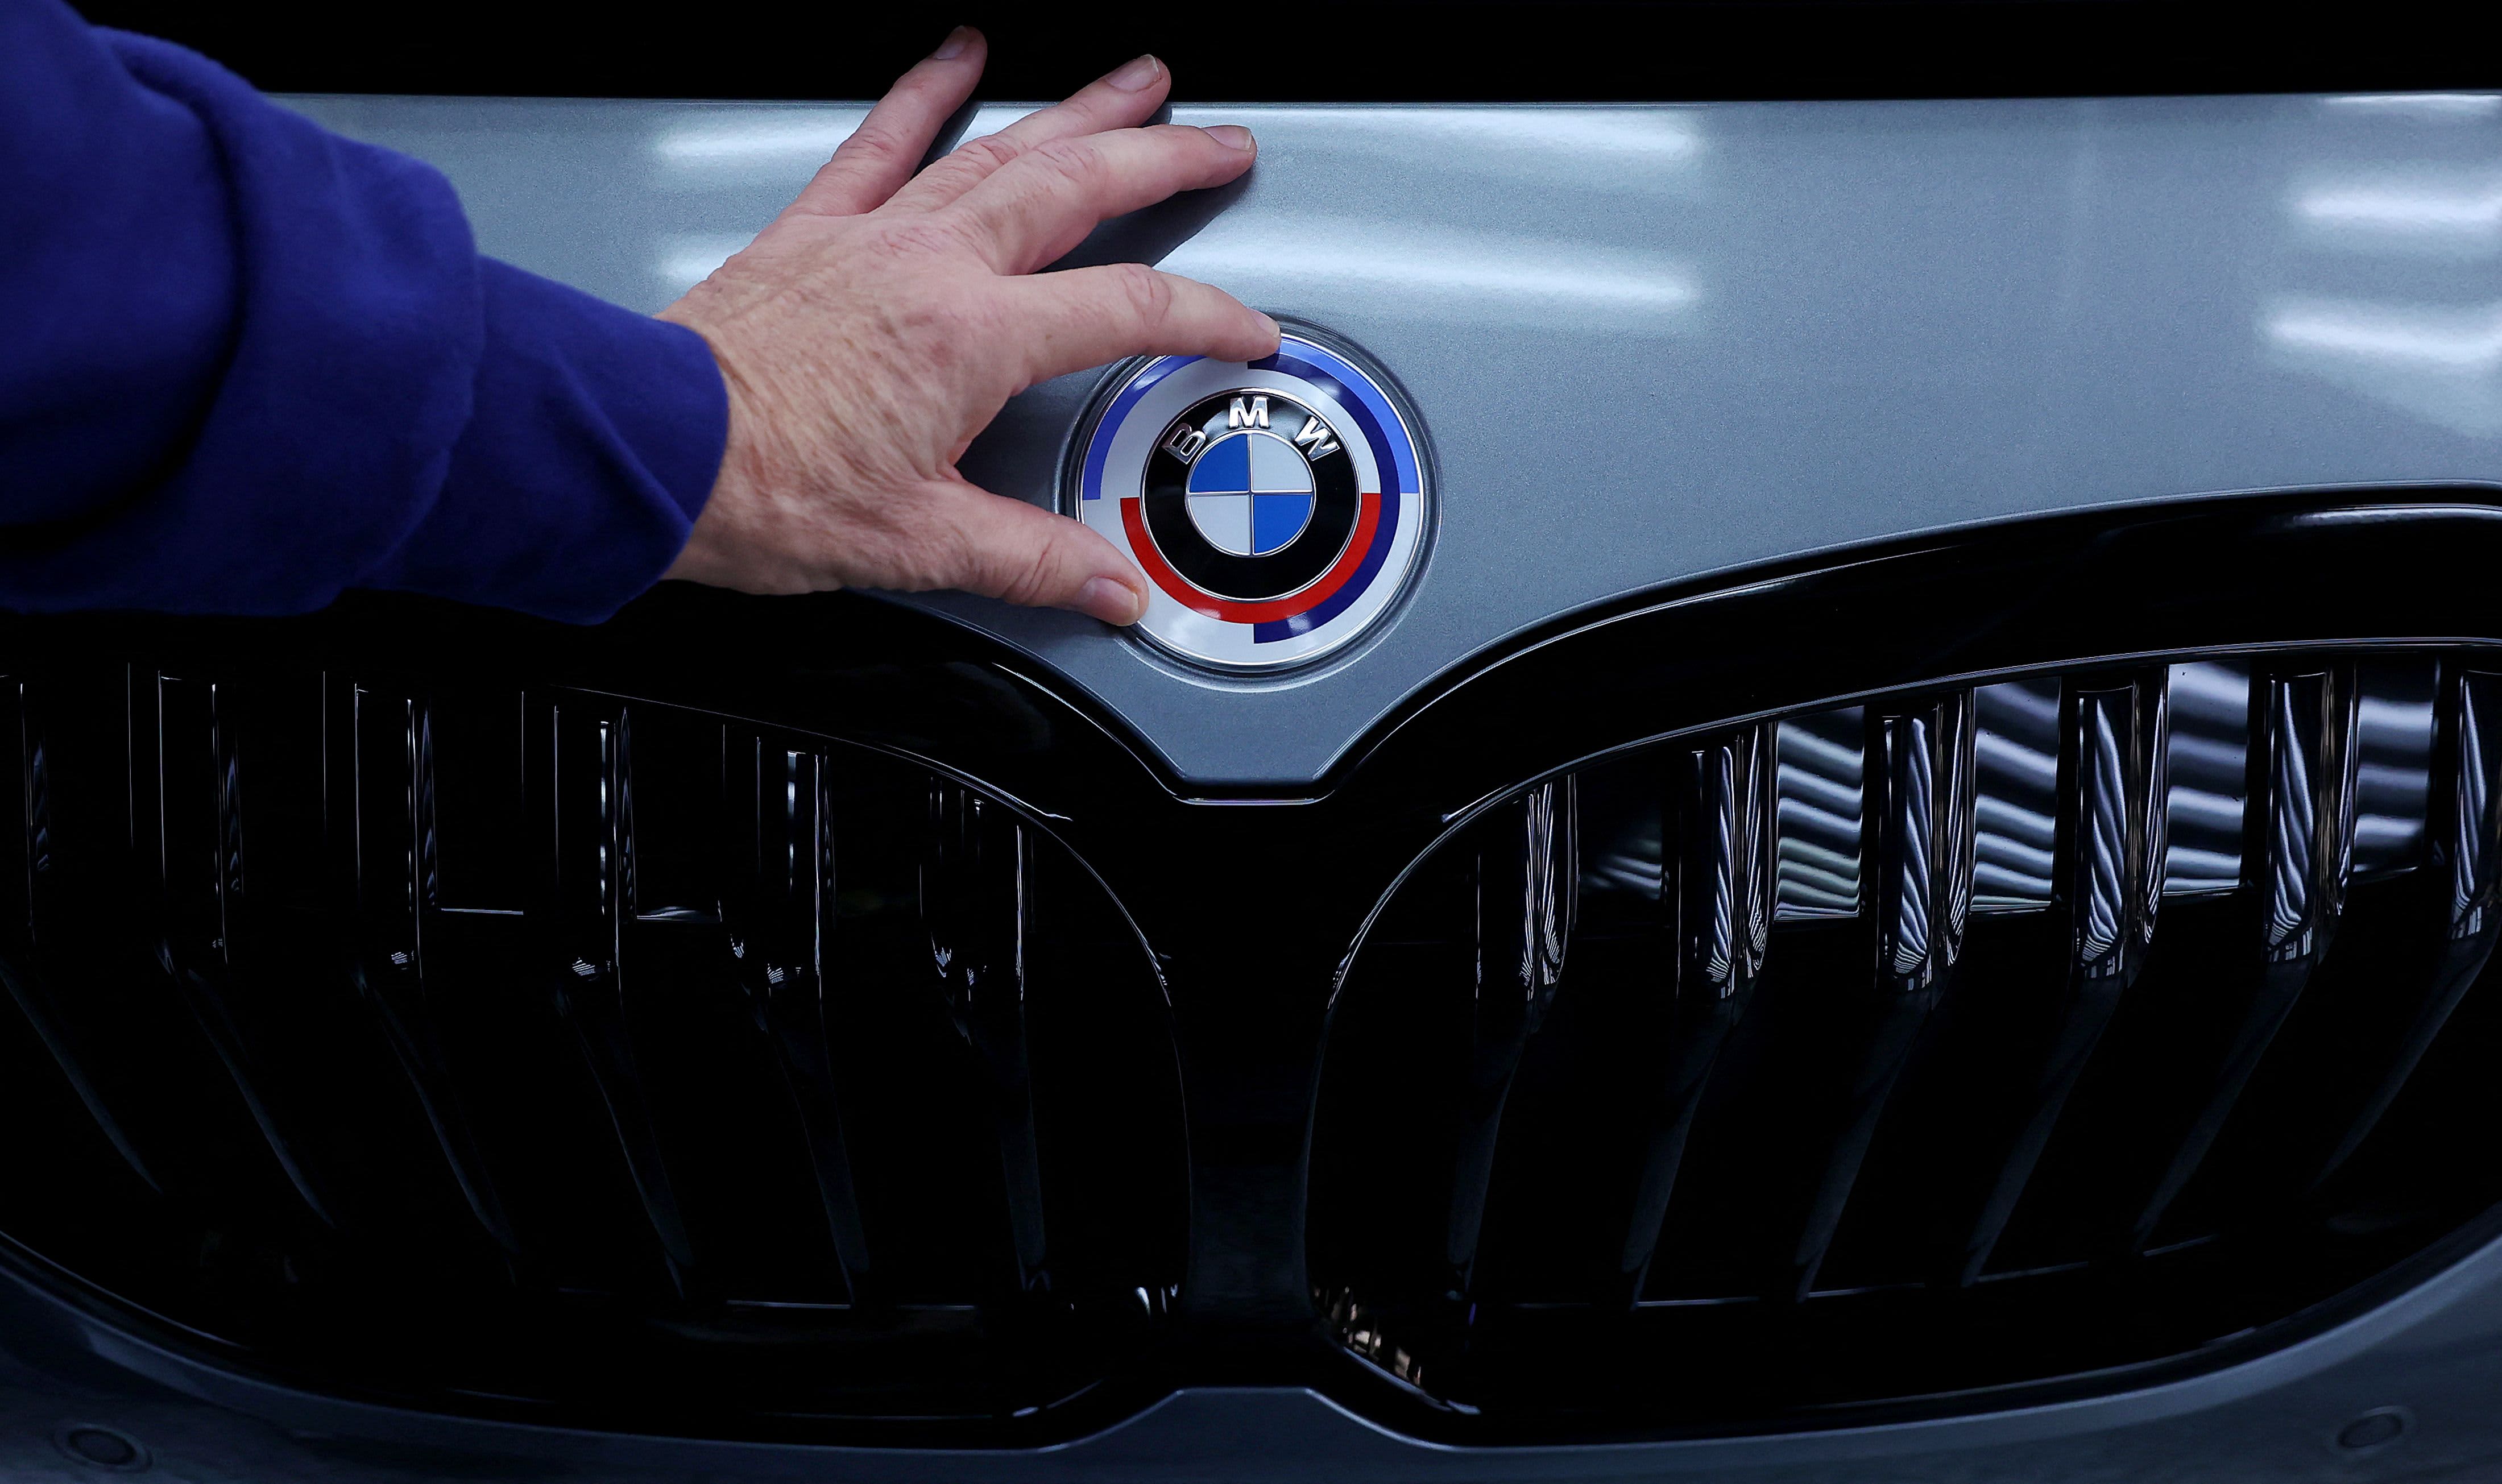 German automaker BMW unveils a new electric car